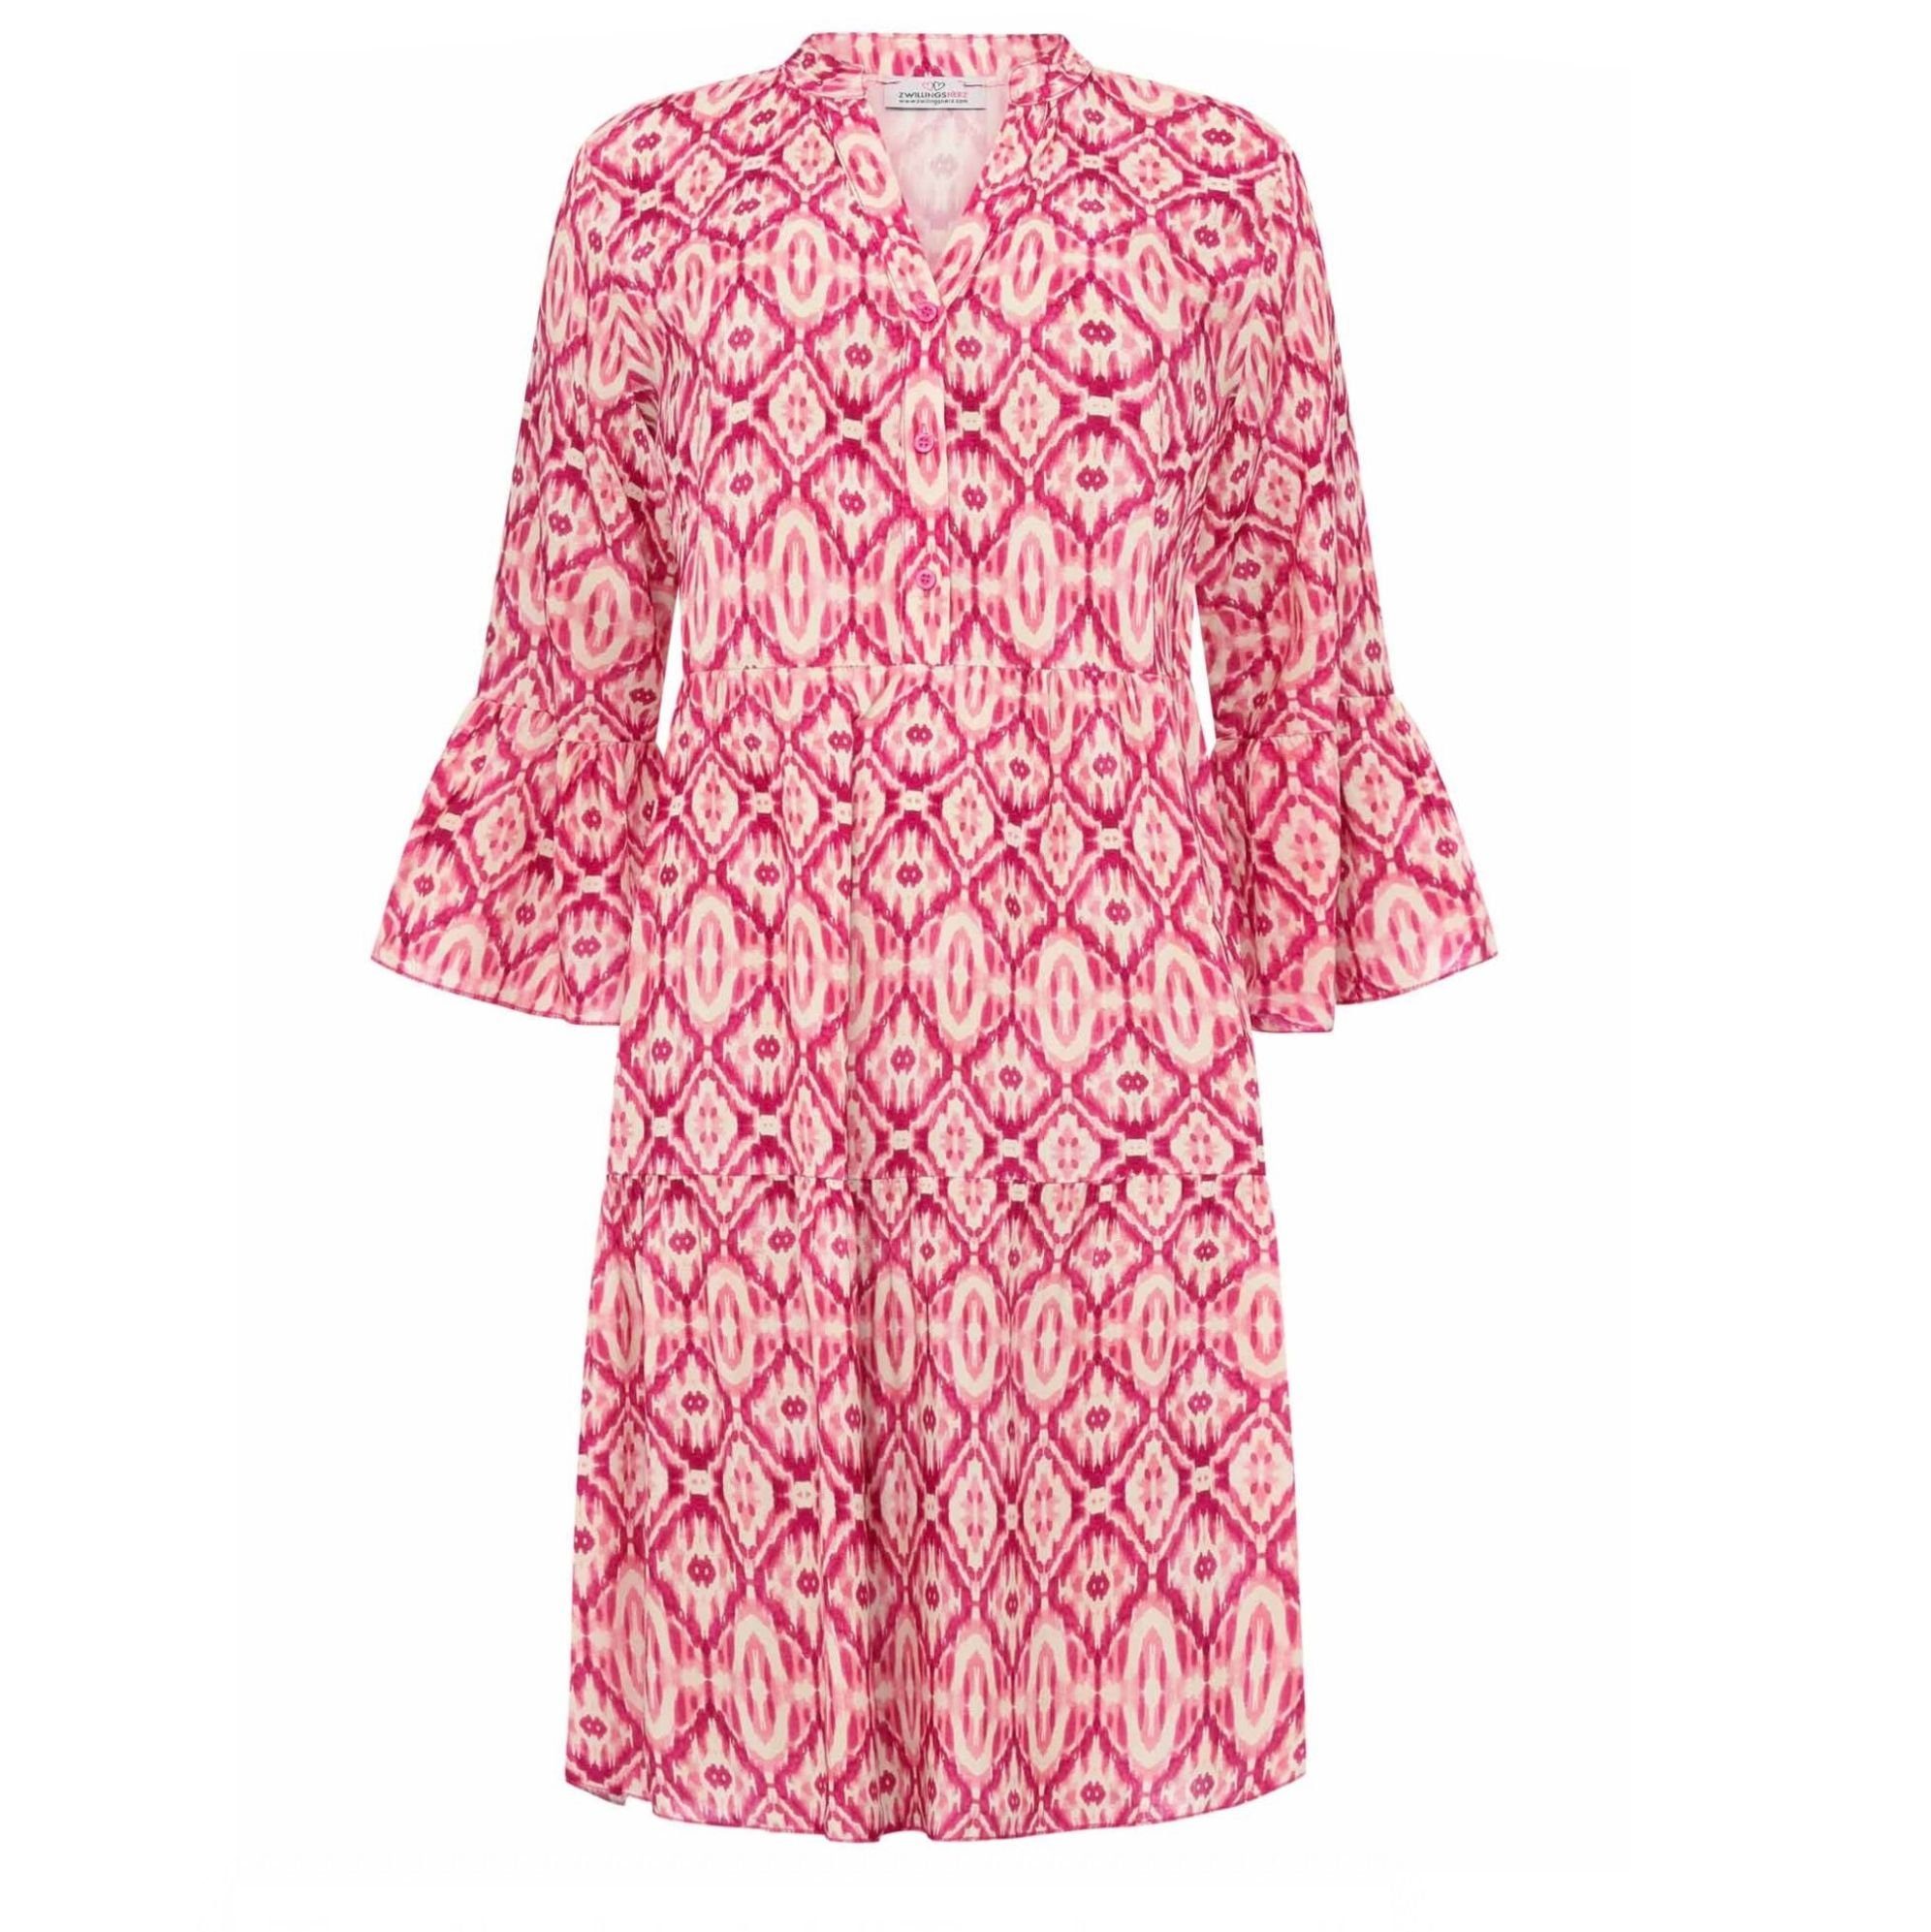 Zwillingsherz Sommerkleid Kleid Toskana Farbe blau oder pink pink-pink